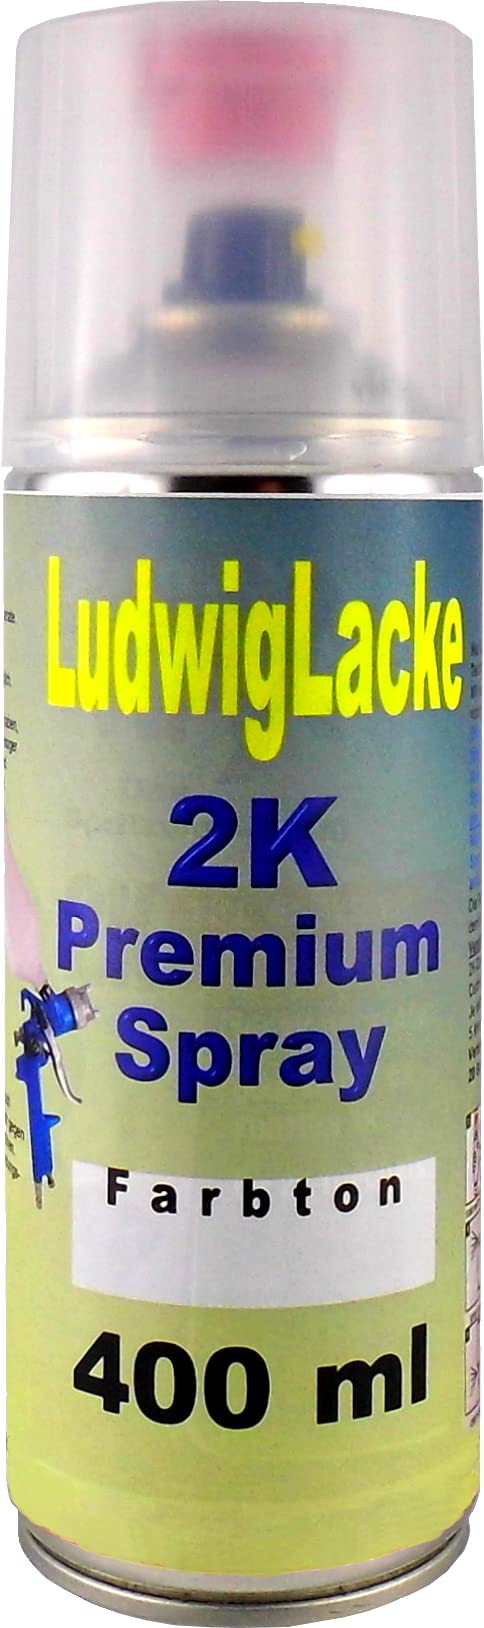 Ludwig Lacke RAL 1019 GRAUBEIGE 2K Premium Spray 400ml von Ludwig Lacke